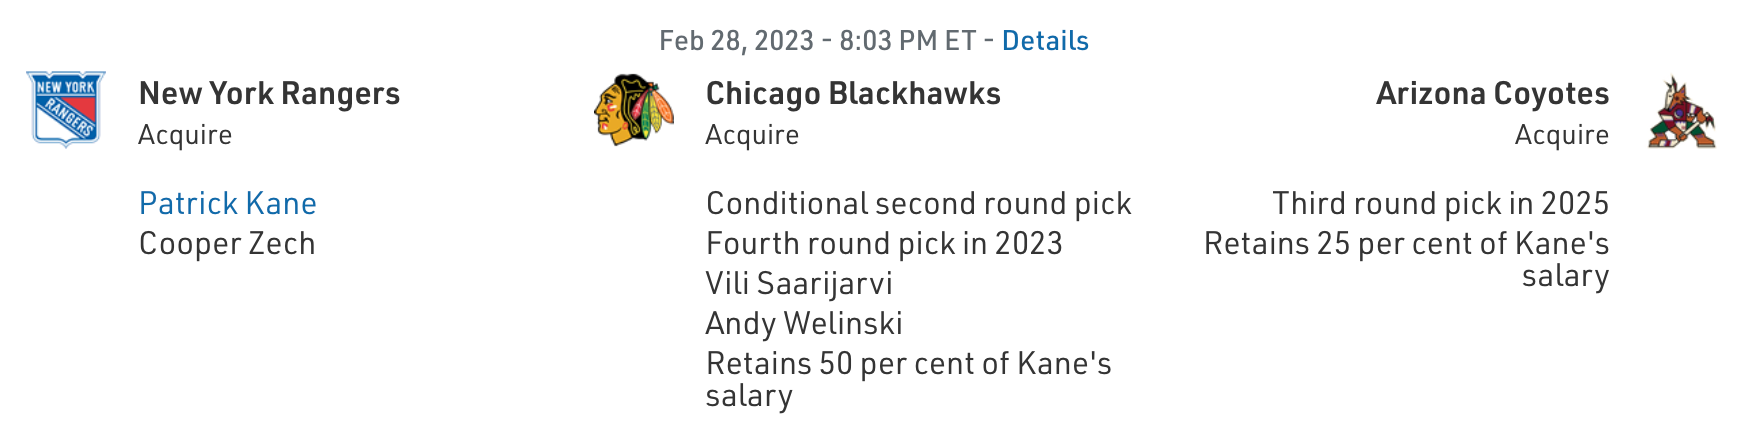 New York Rangers acquire Blackhawks star Patrick Kane in blockbuster trade, NHL